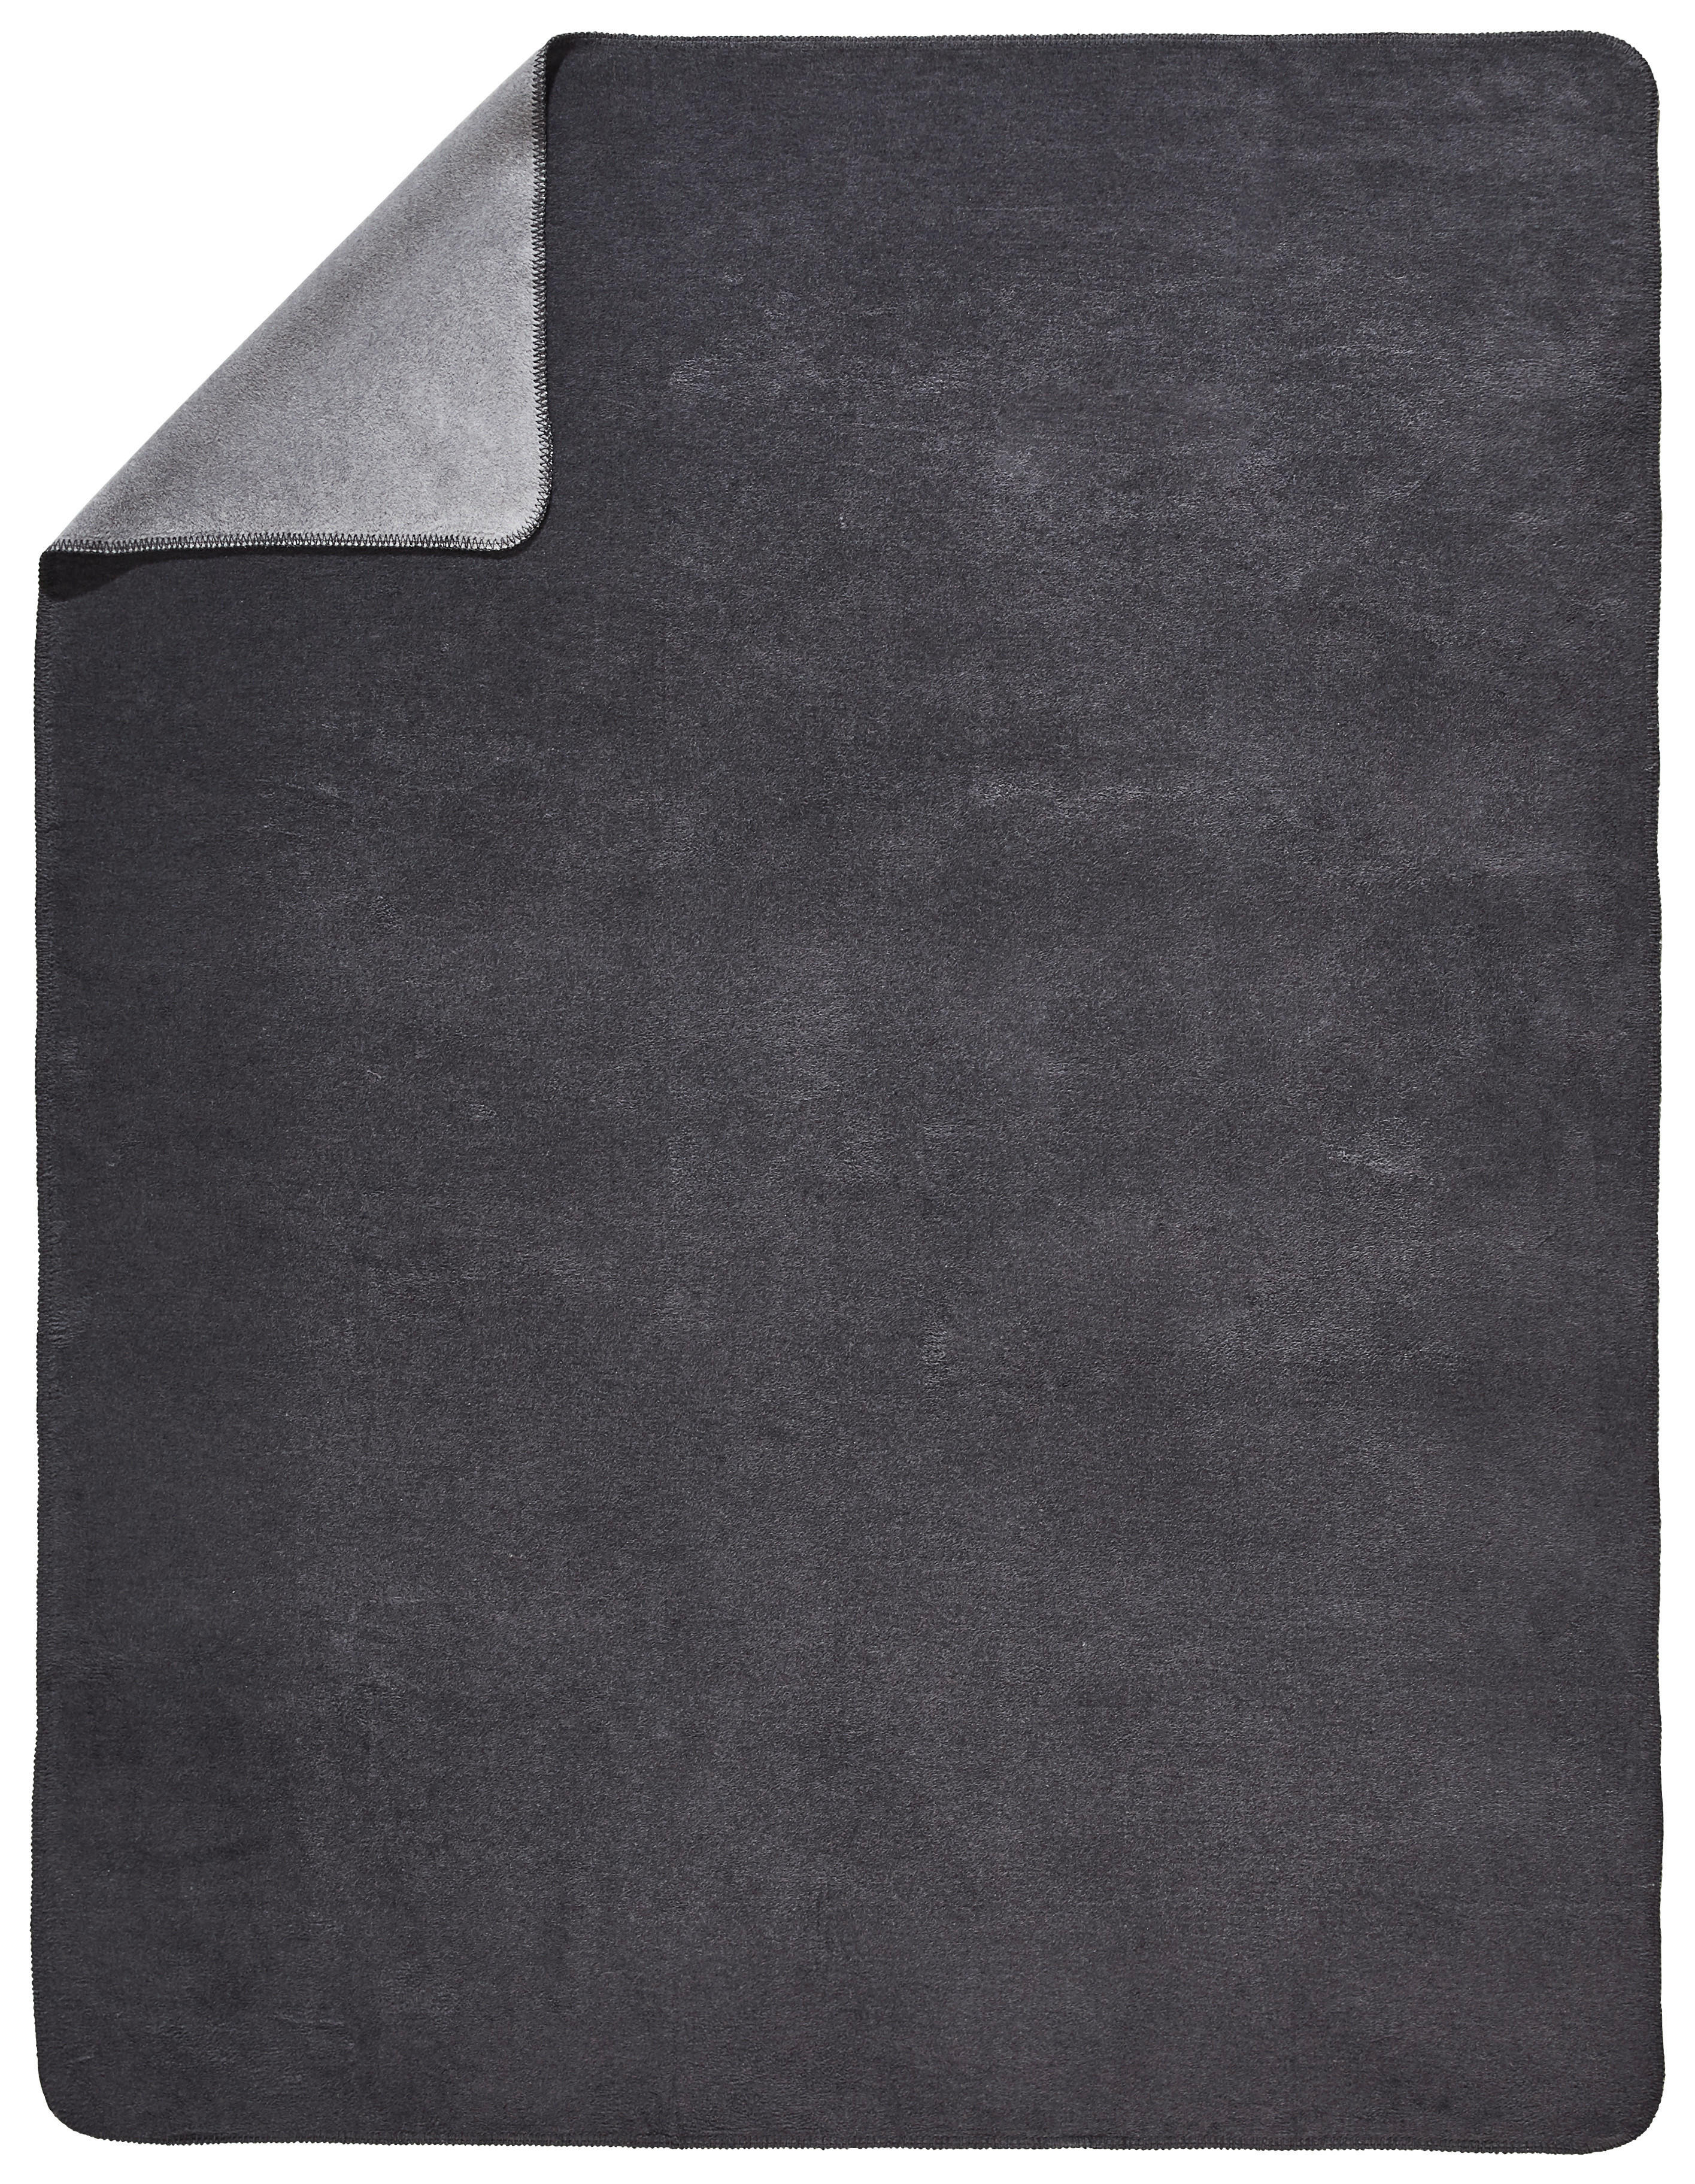 WOHNDECKE De Vela Novel 150/200 cm  - Silberfarben/Grau, Basics, Textil (150/200cm) - Novel